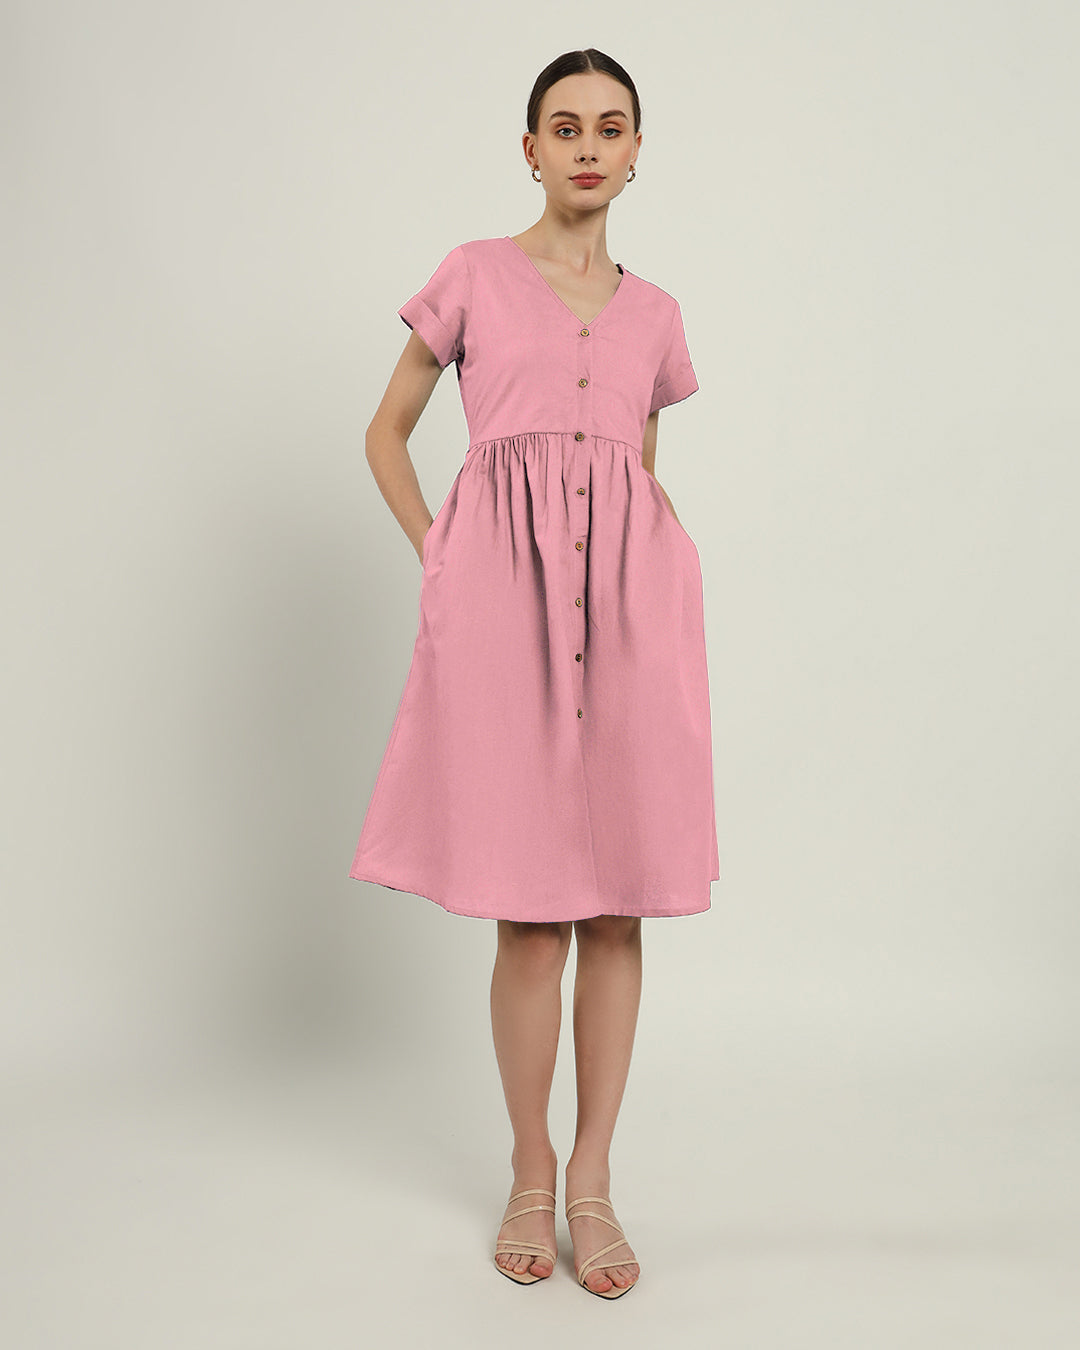 The Valence Fondant Pink Cotton Dress